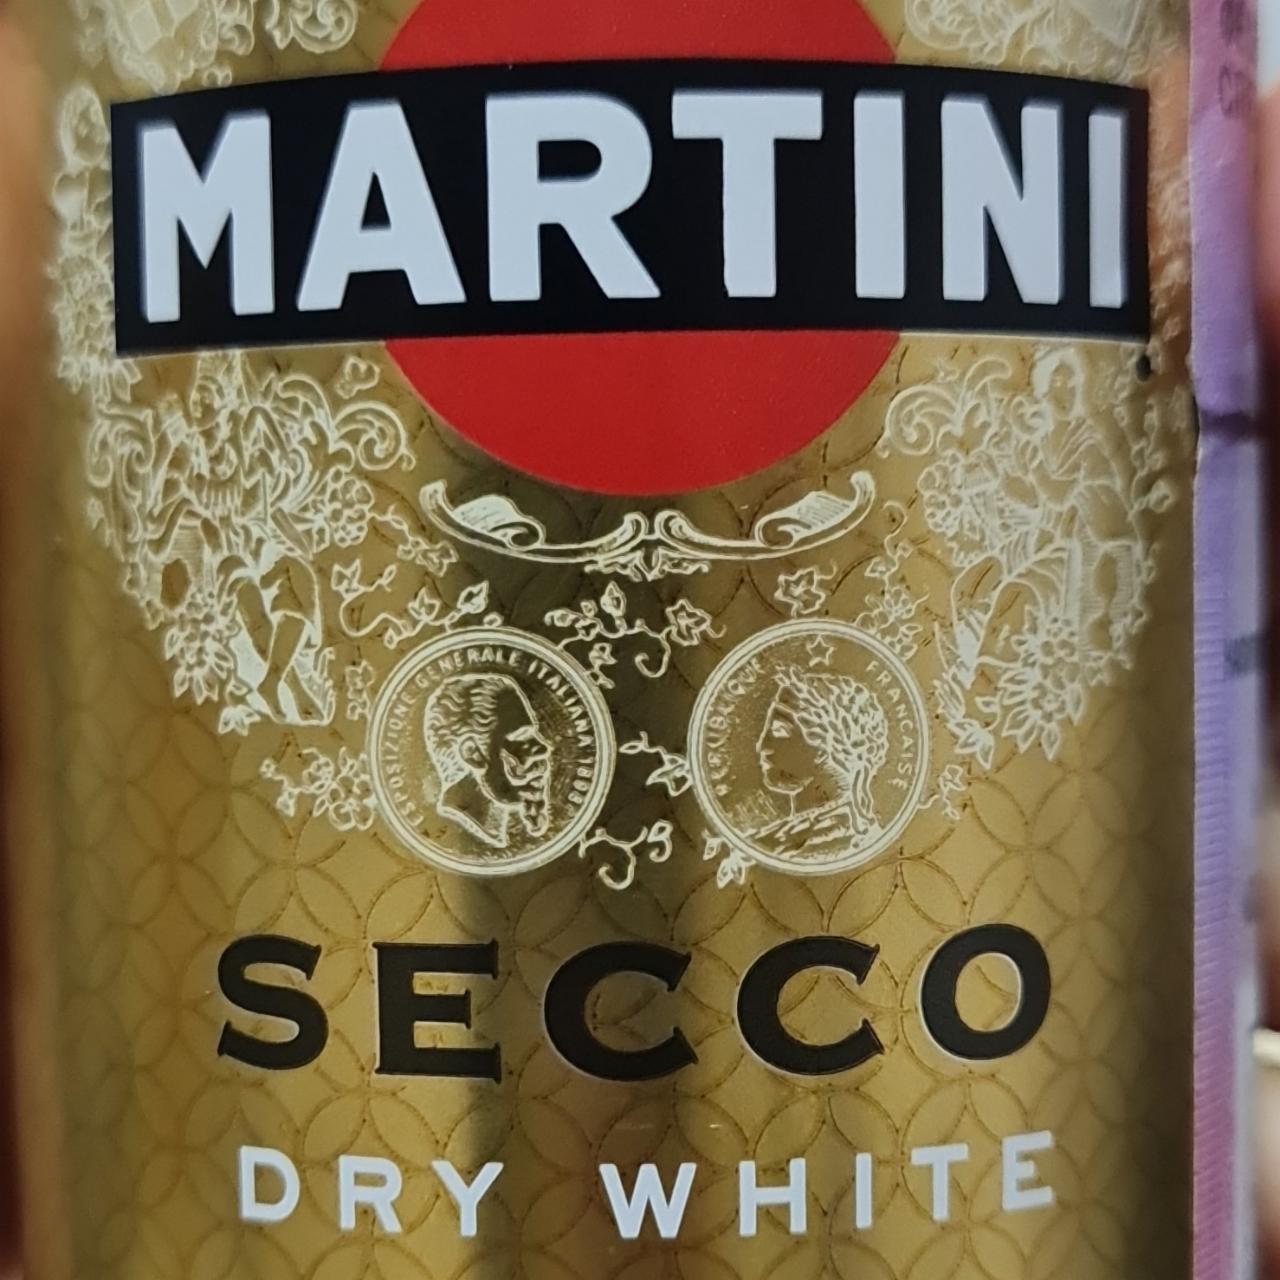 Фото - Вермут белый Extra Secco Dry white Martini